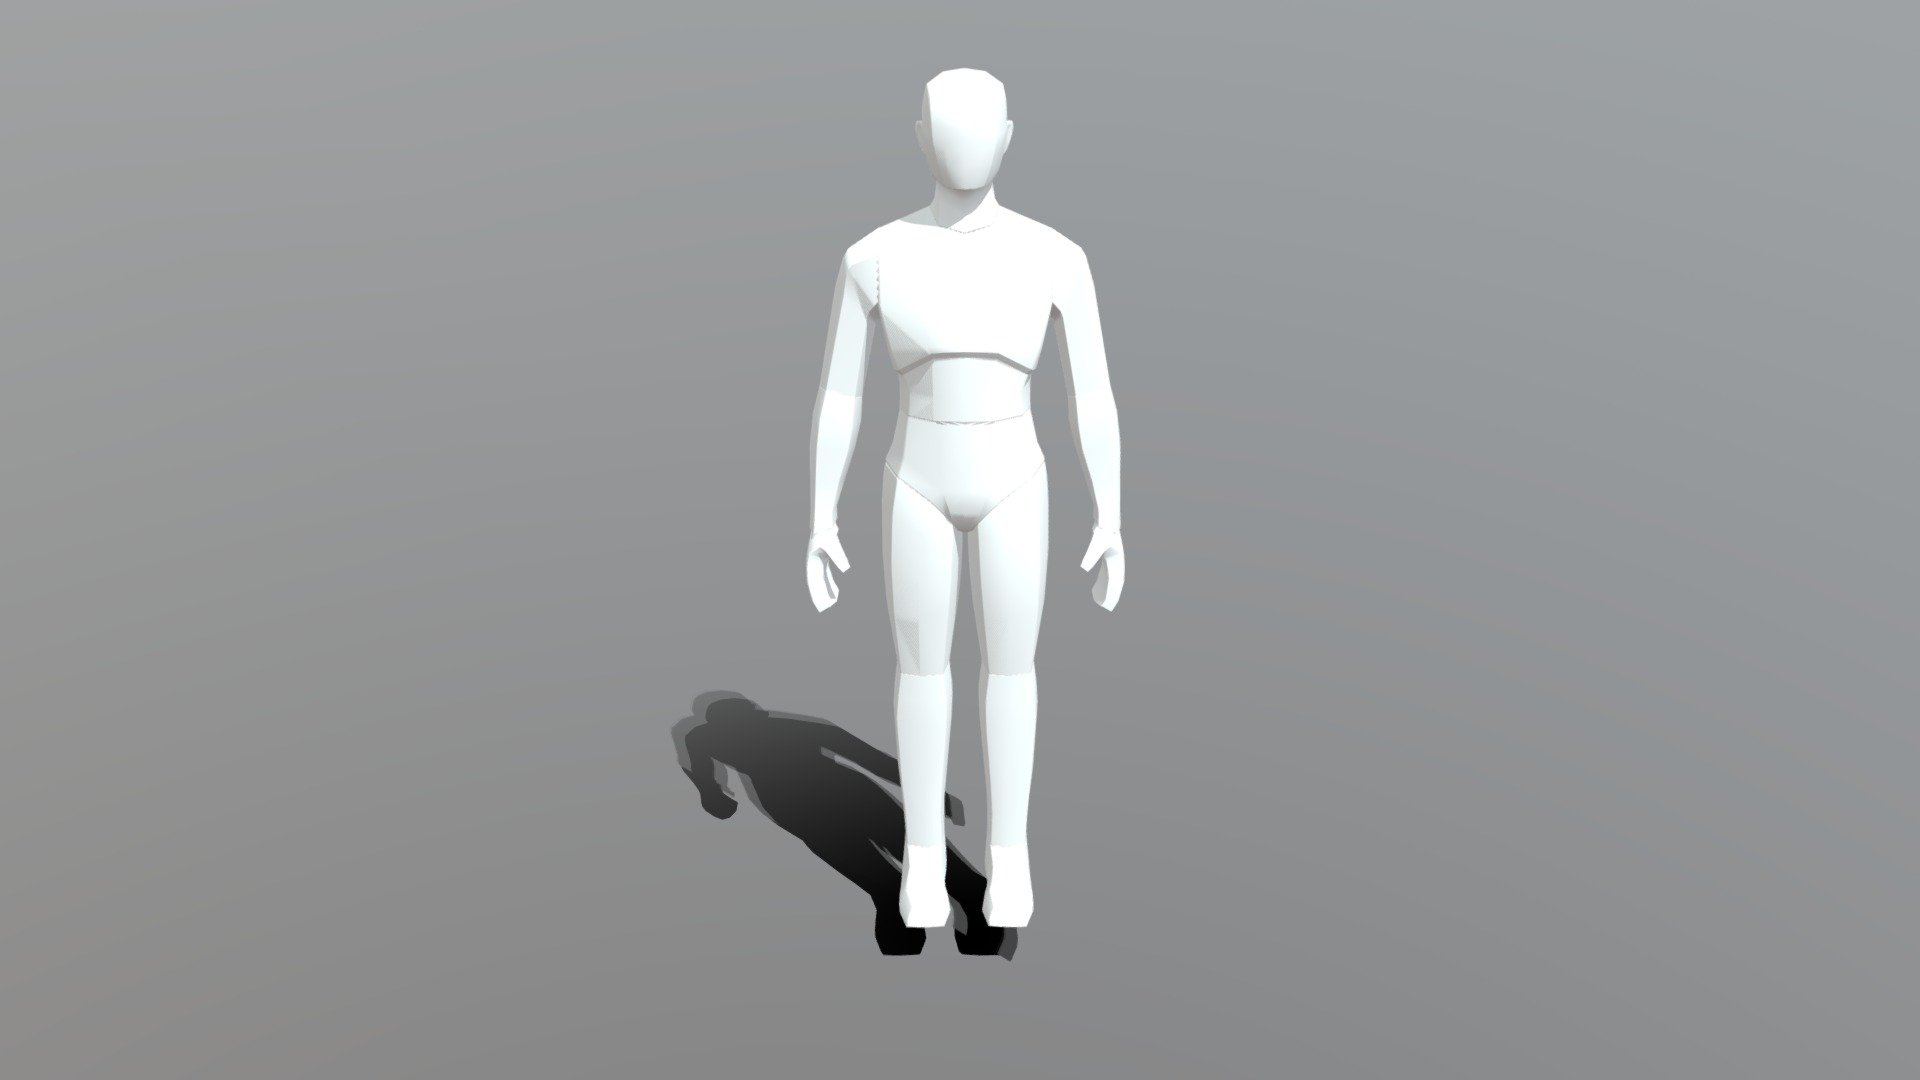 I_orL on X: stylized male body anatomy 3d model #Roblox #RobloxDev  #blender #Blender3d  / X